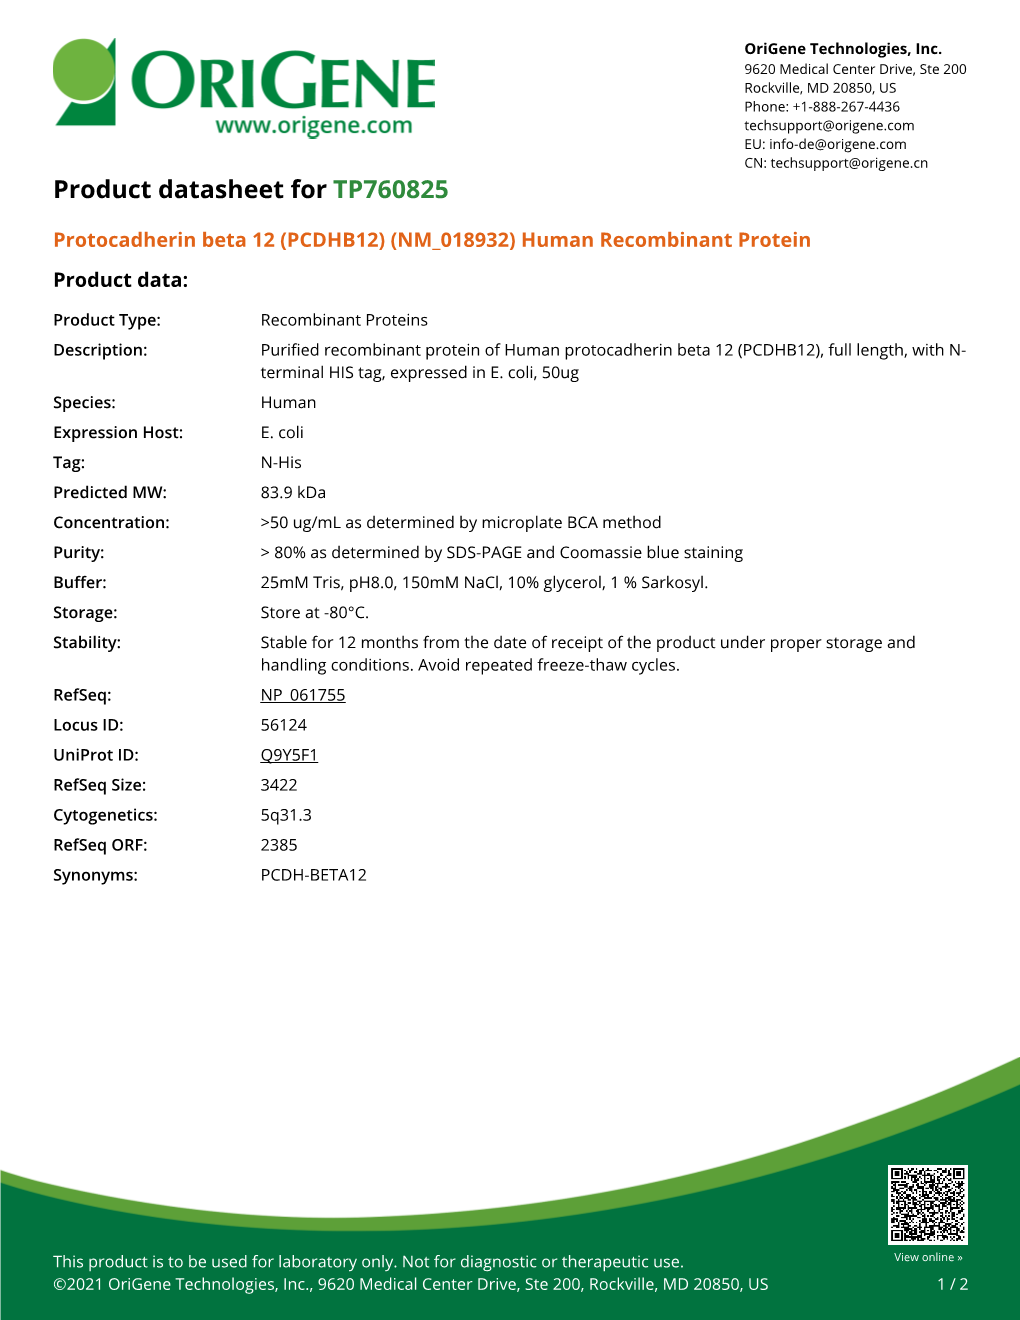 Protocadherin Beta 12 (PCDHB12) (NM 018932) Human Recombinant Protein Product Data